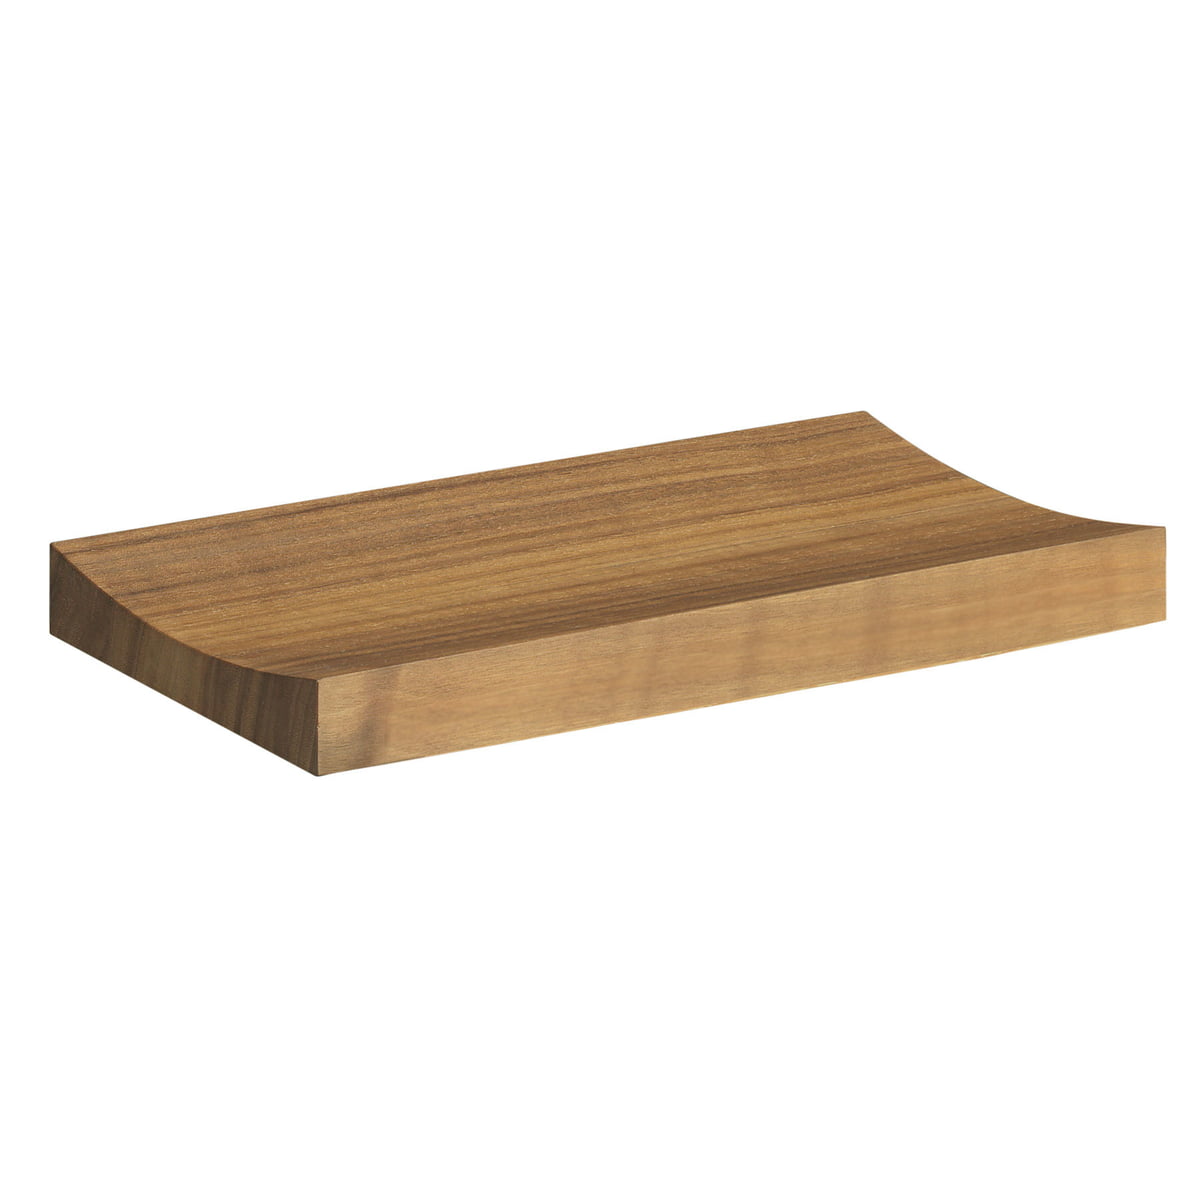 Pen tray, alder wood